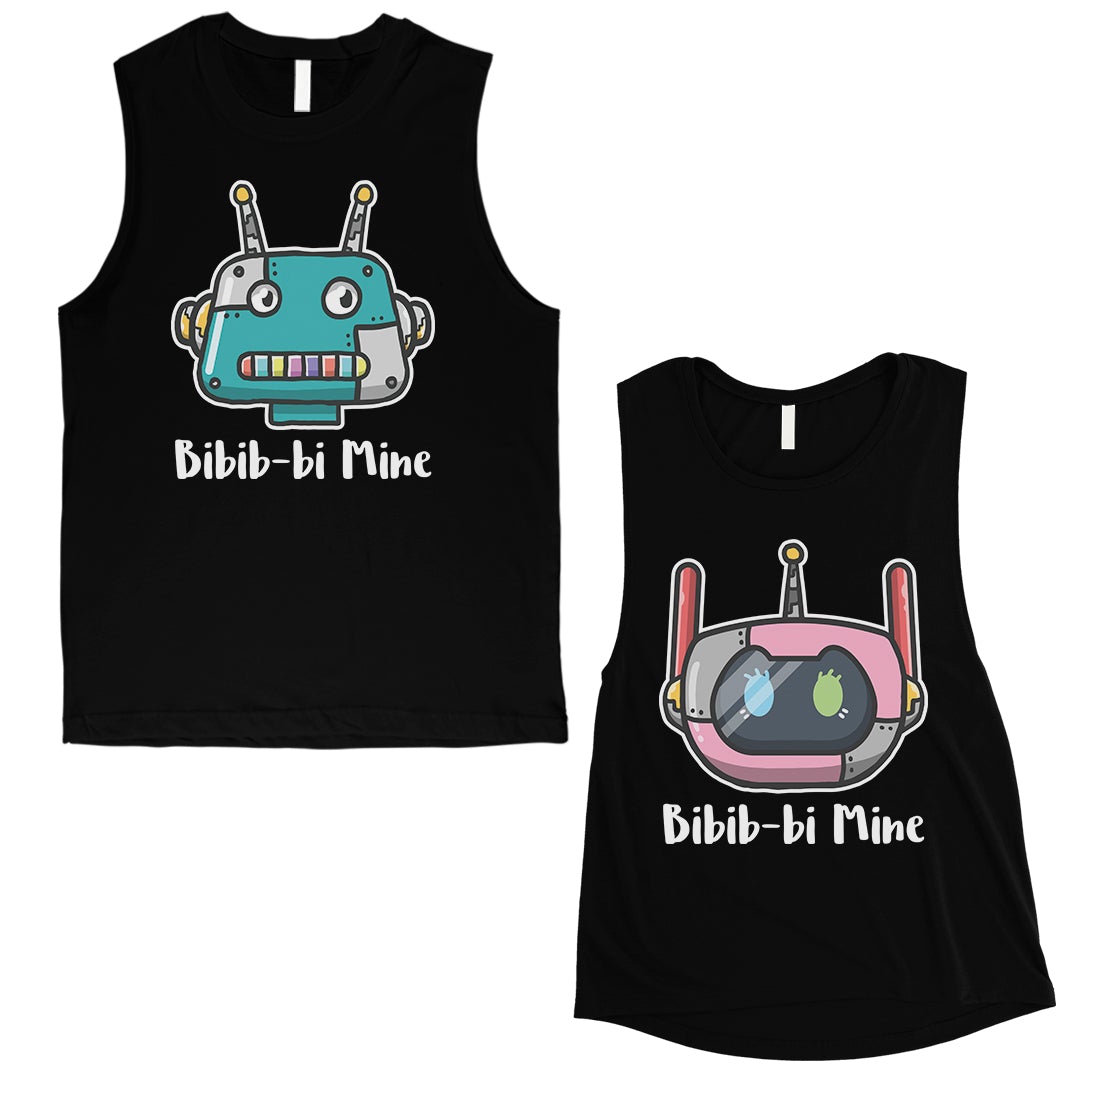 Bibib-bi Mine Couples Matching Muscle Tank Tops Anniversary Gift Black